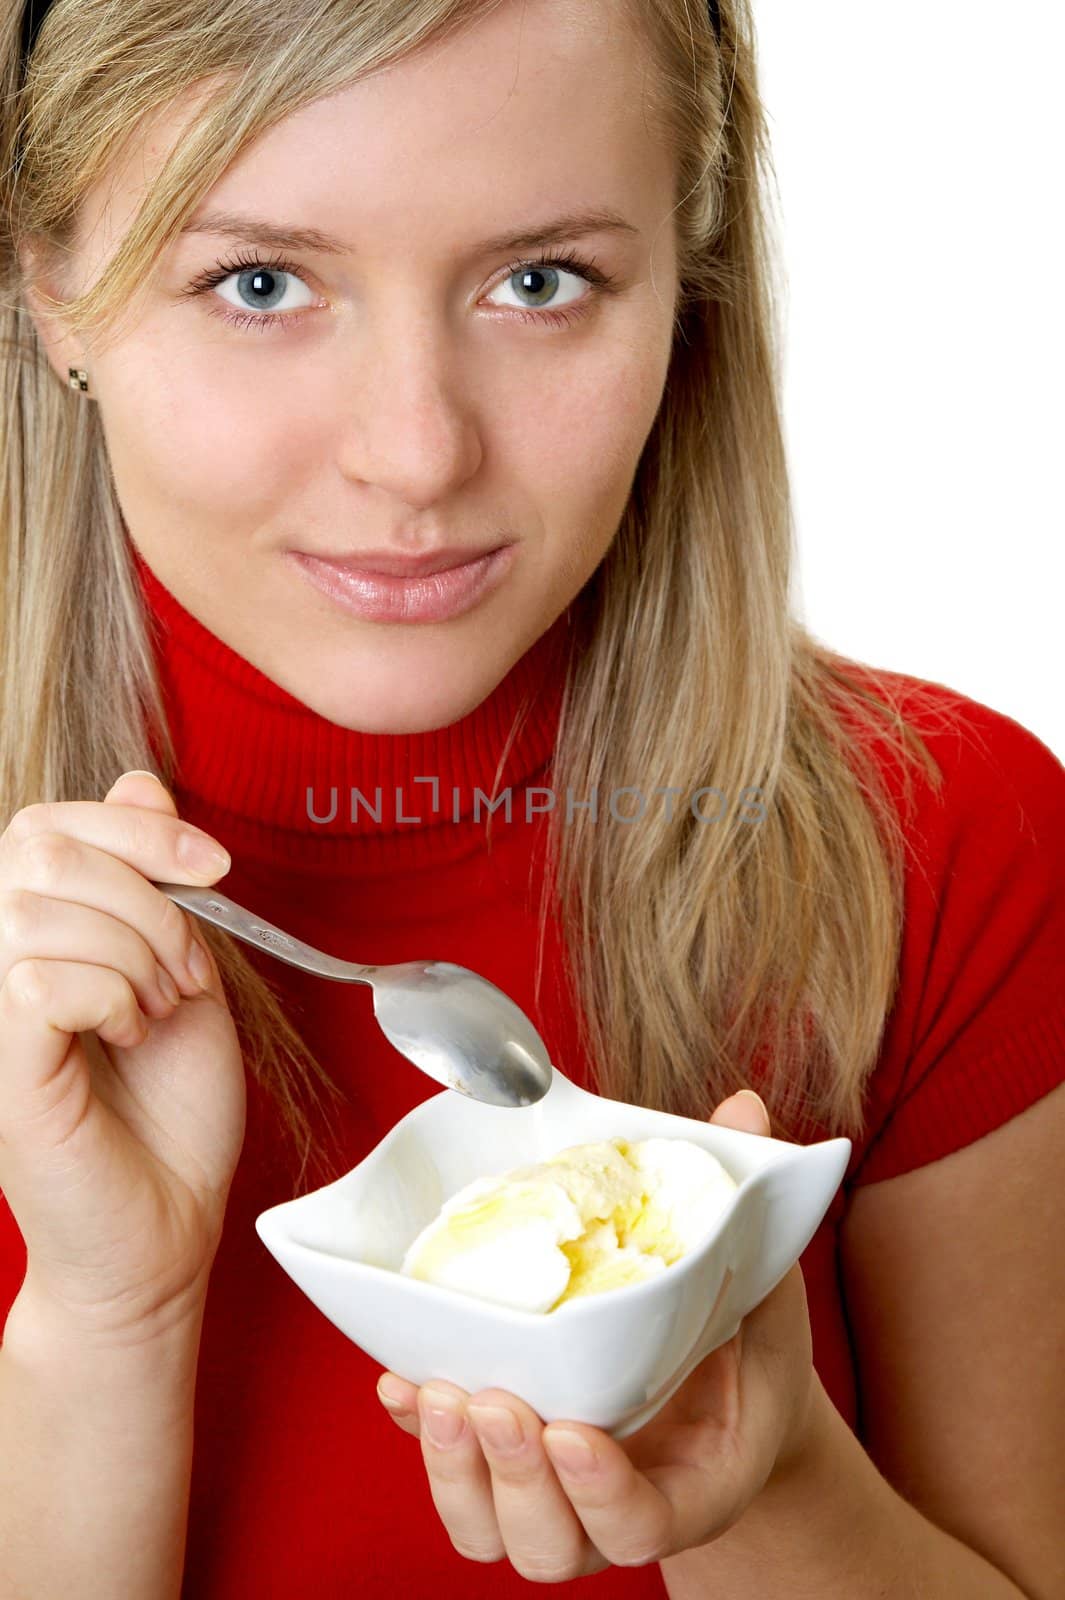 beautiful girl eating ice cream, separate on white